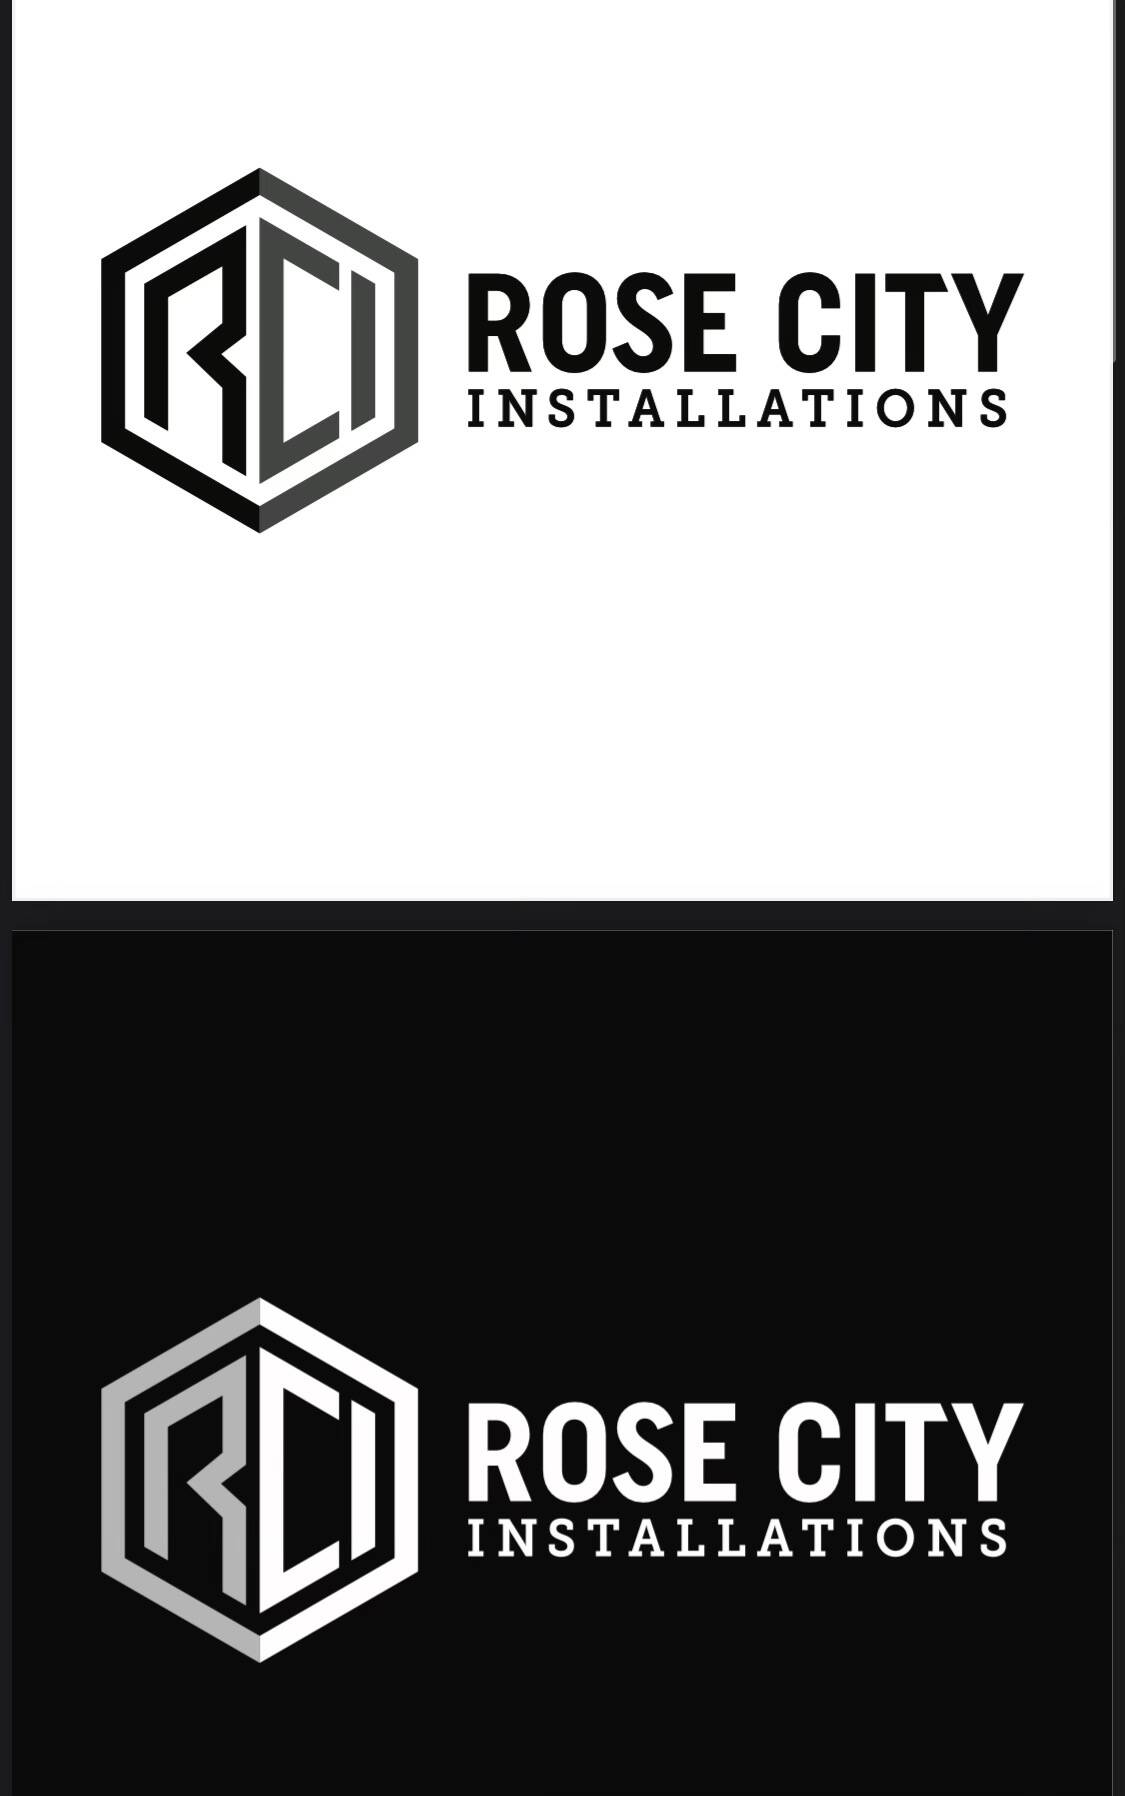 Rose City Installations